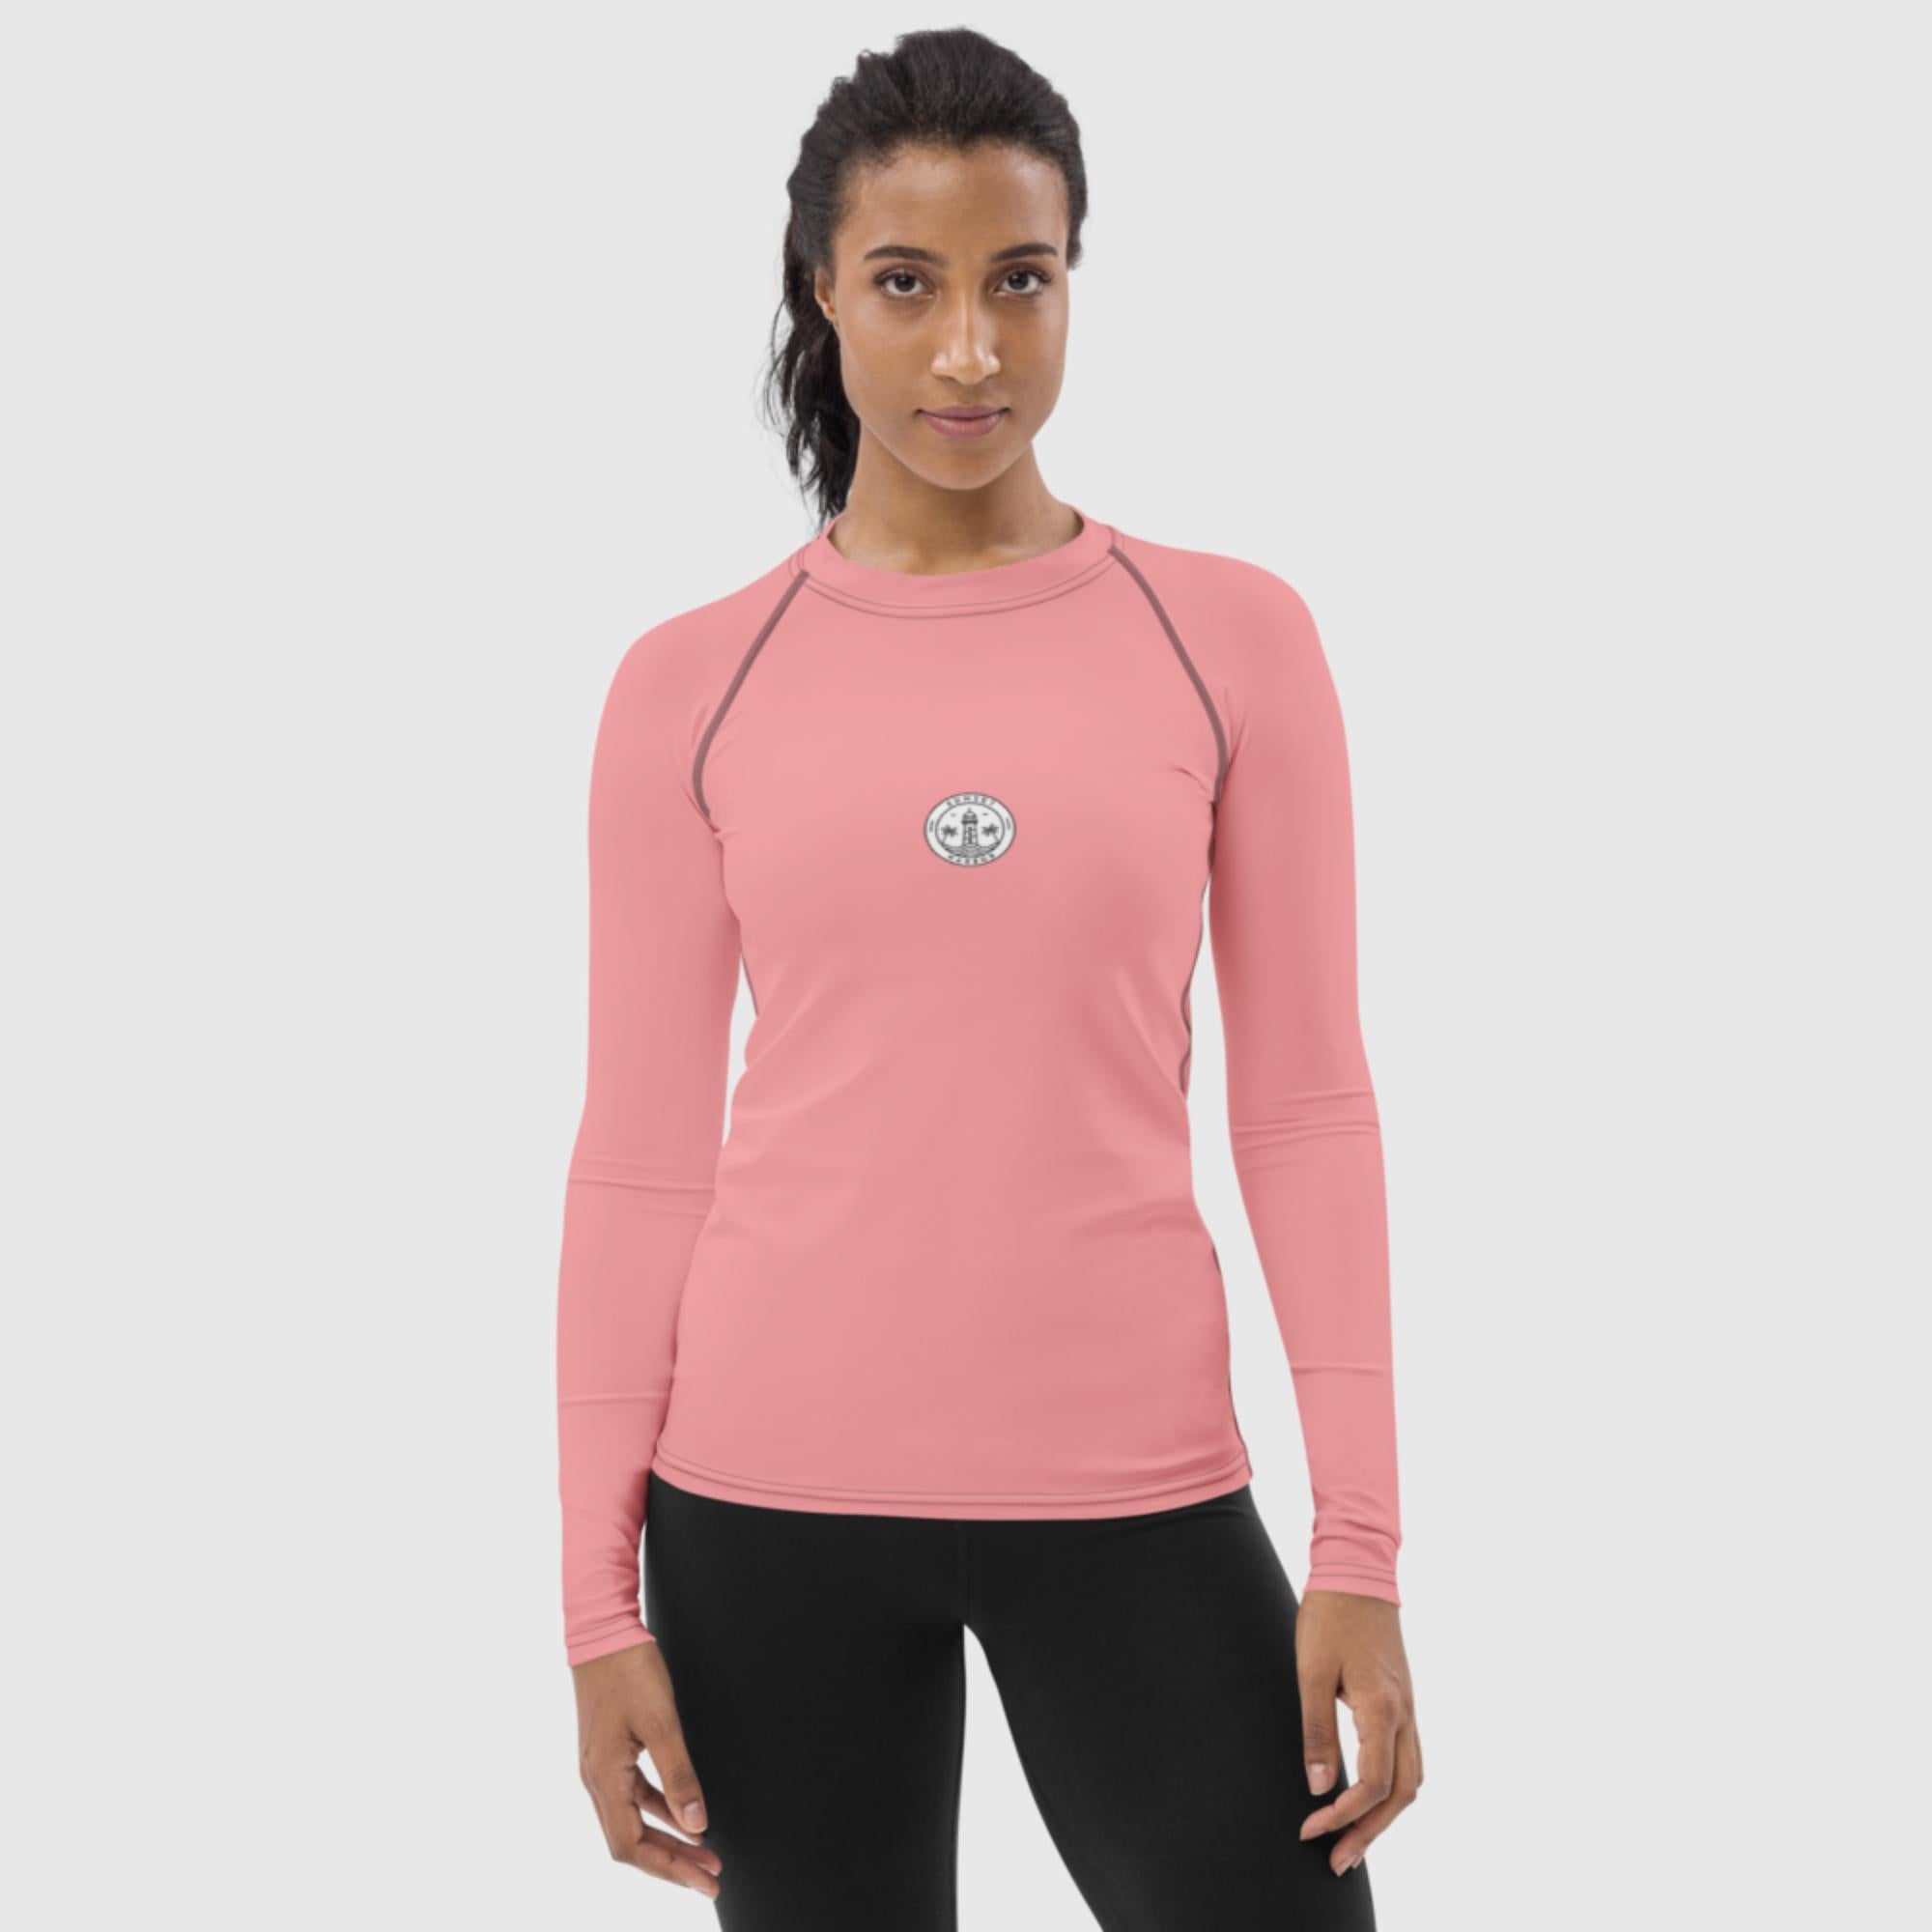 Women's Rash Guard - Pink - Sunset Harbor Clothing